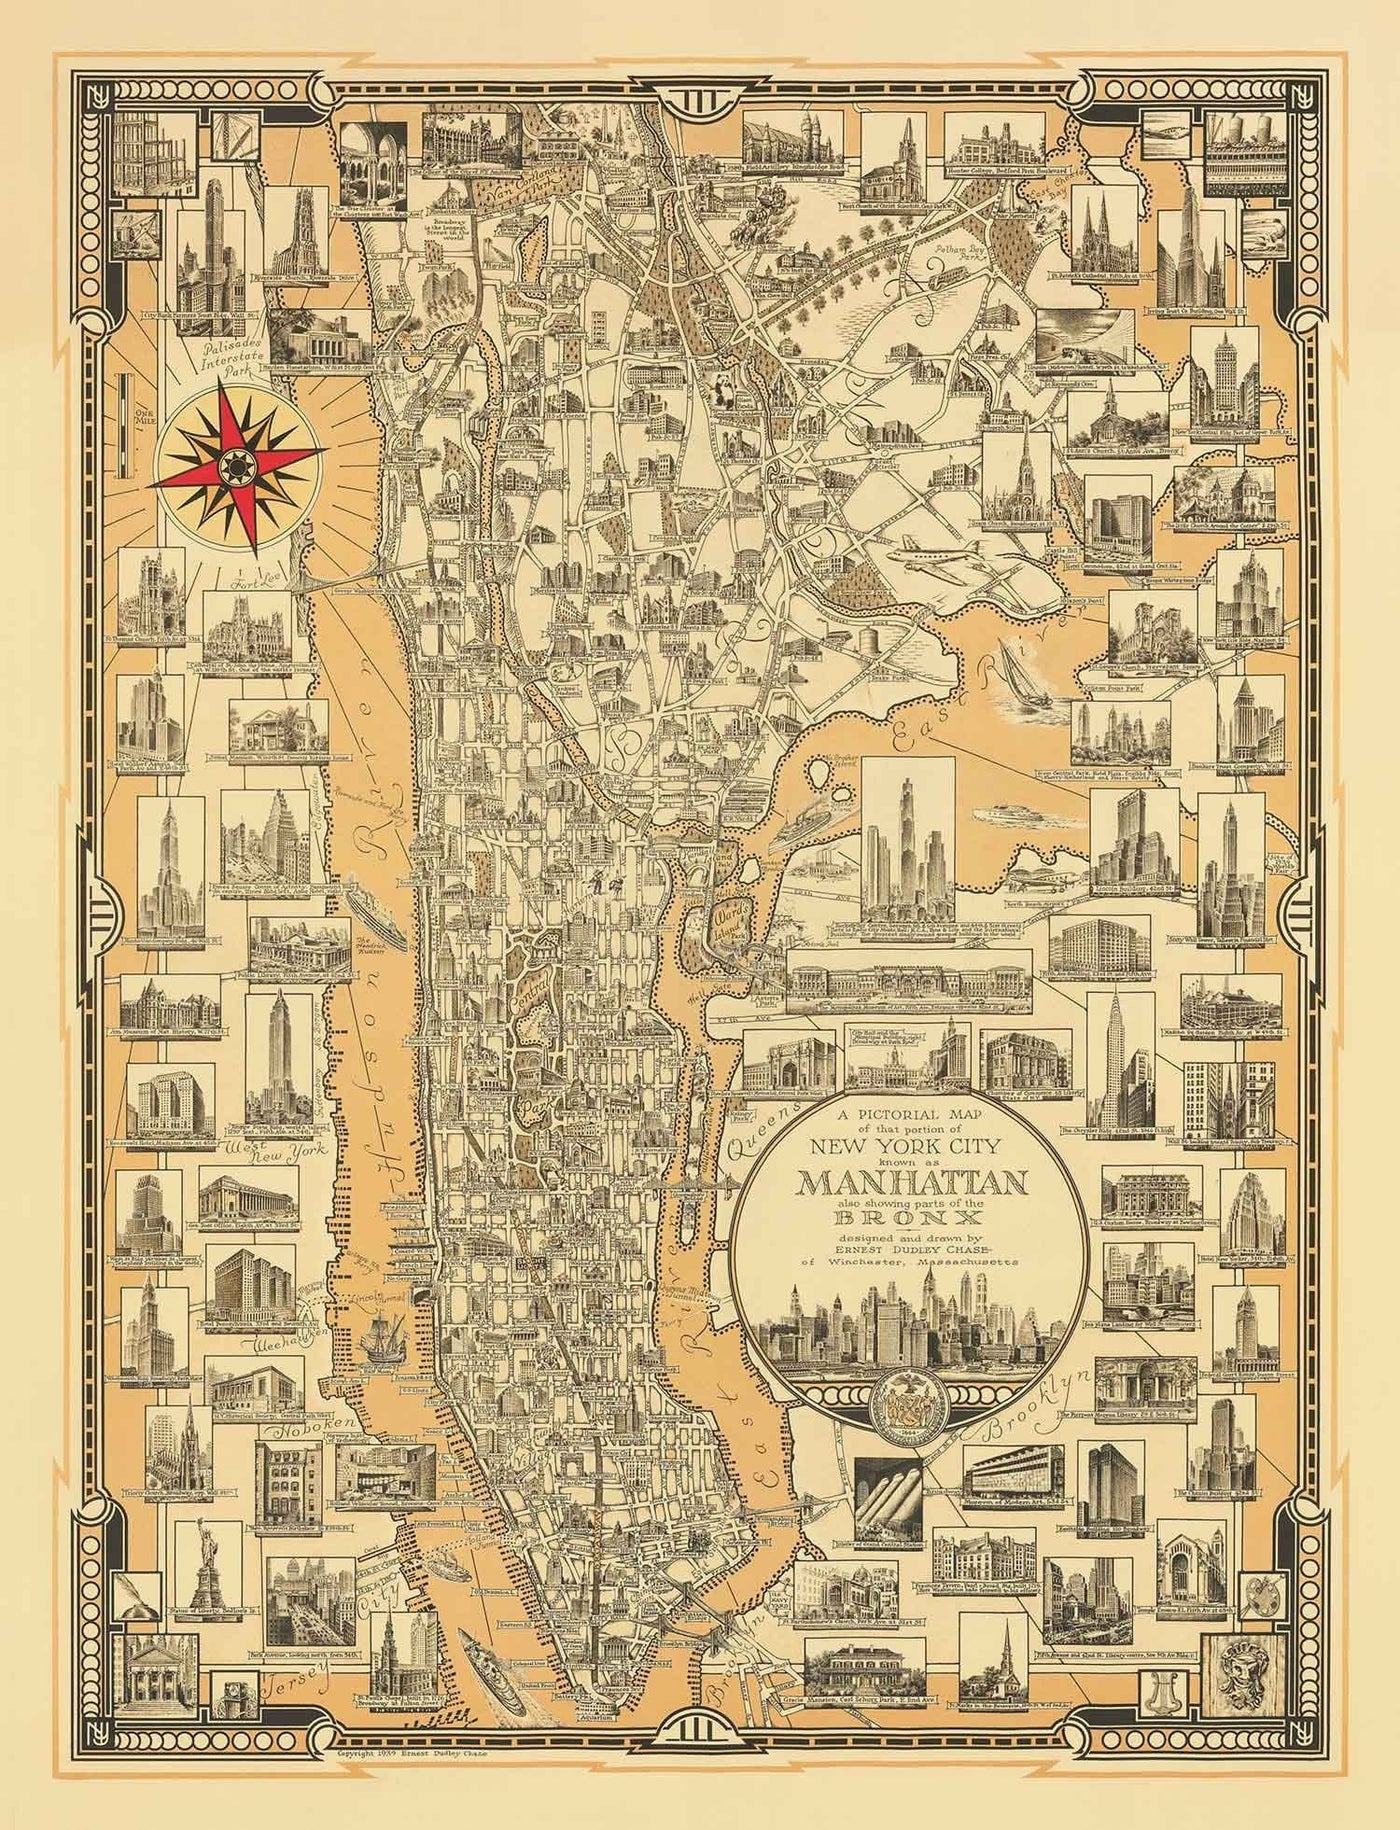 Old Pictorial Map of Manhattan & the Bronx, 1939 par E. Chase - Merrassement, gratte-ciel, River Hudson